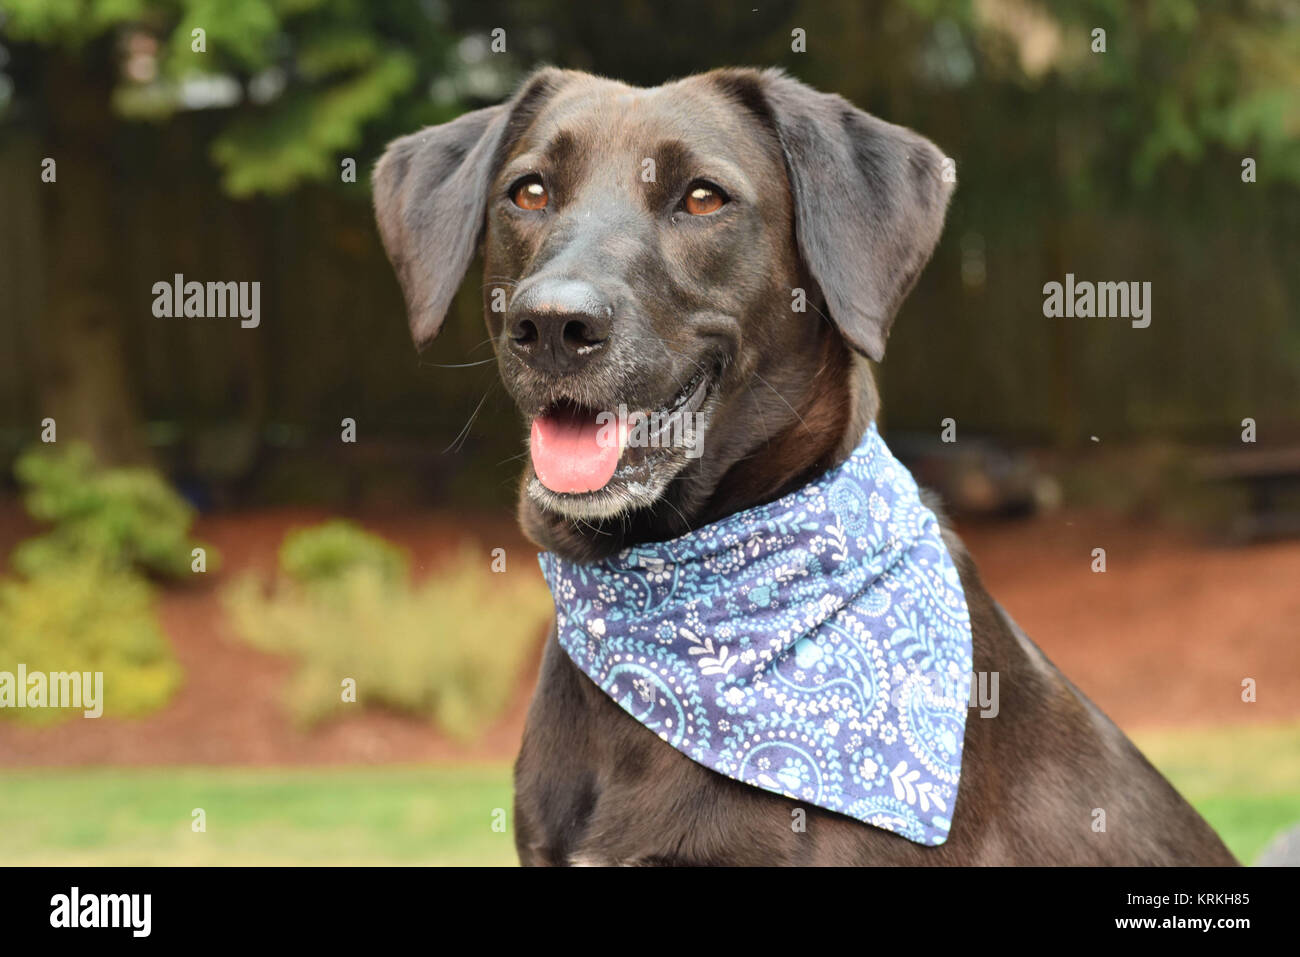 Nero cane sorridente in una bandana blu. Foto Stock